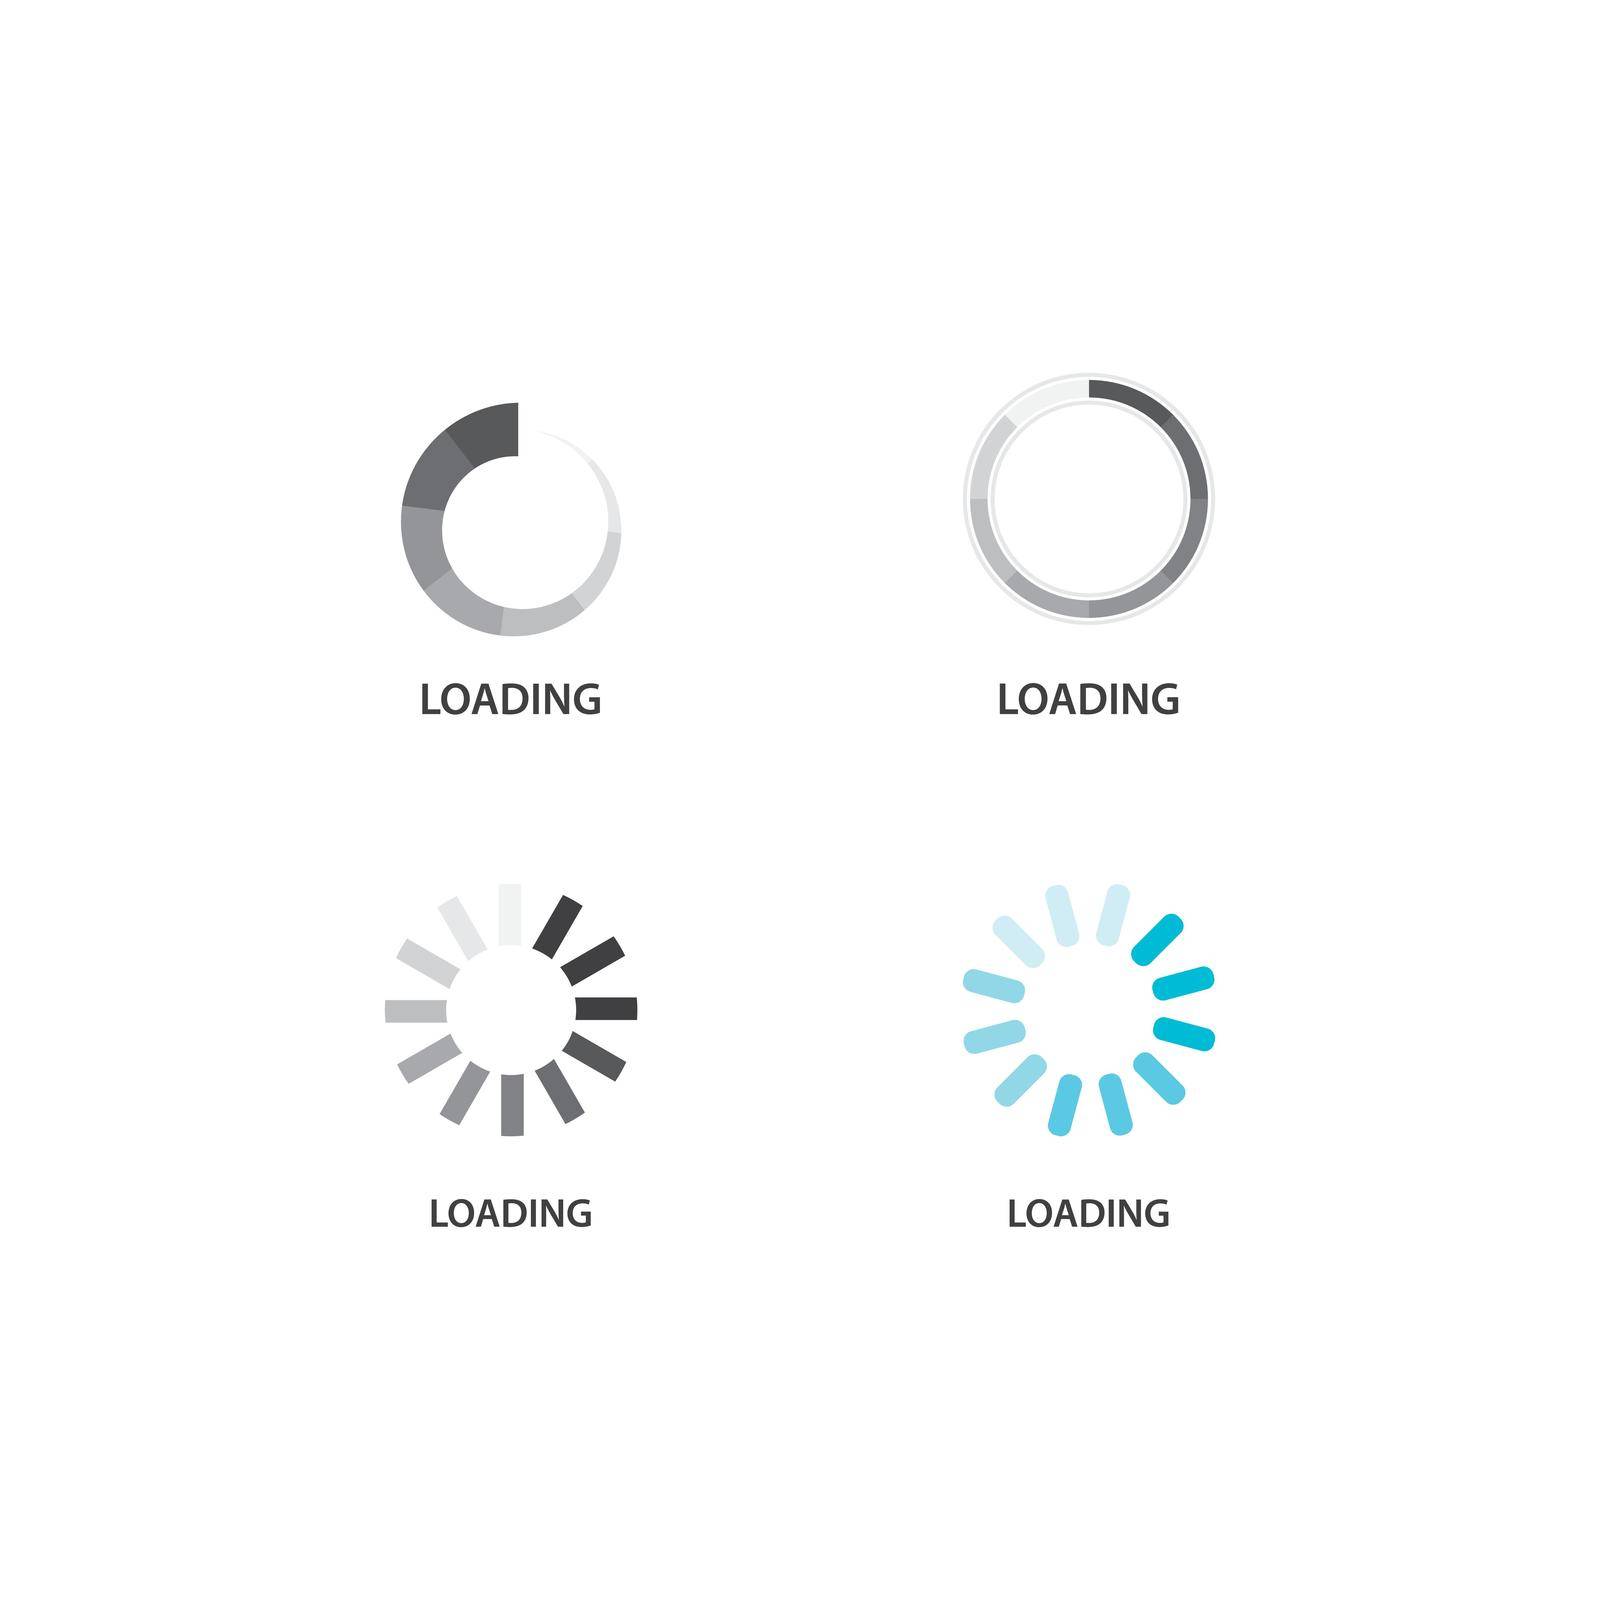 Loading indicator icon by awk